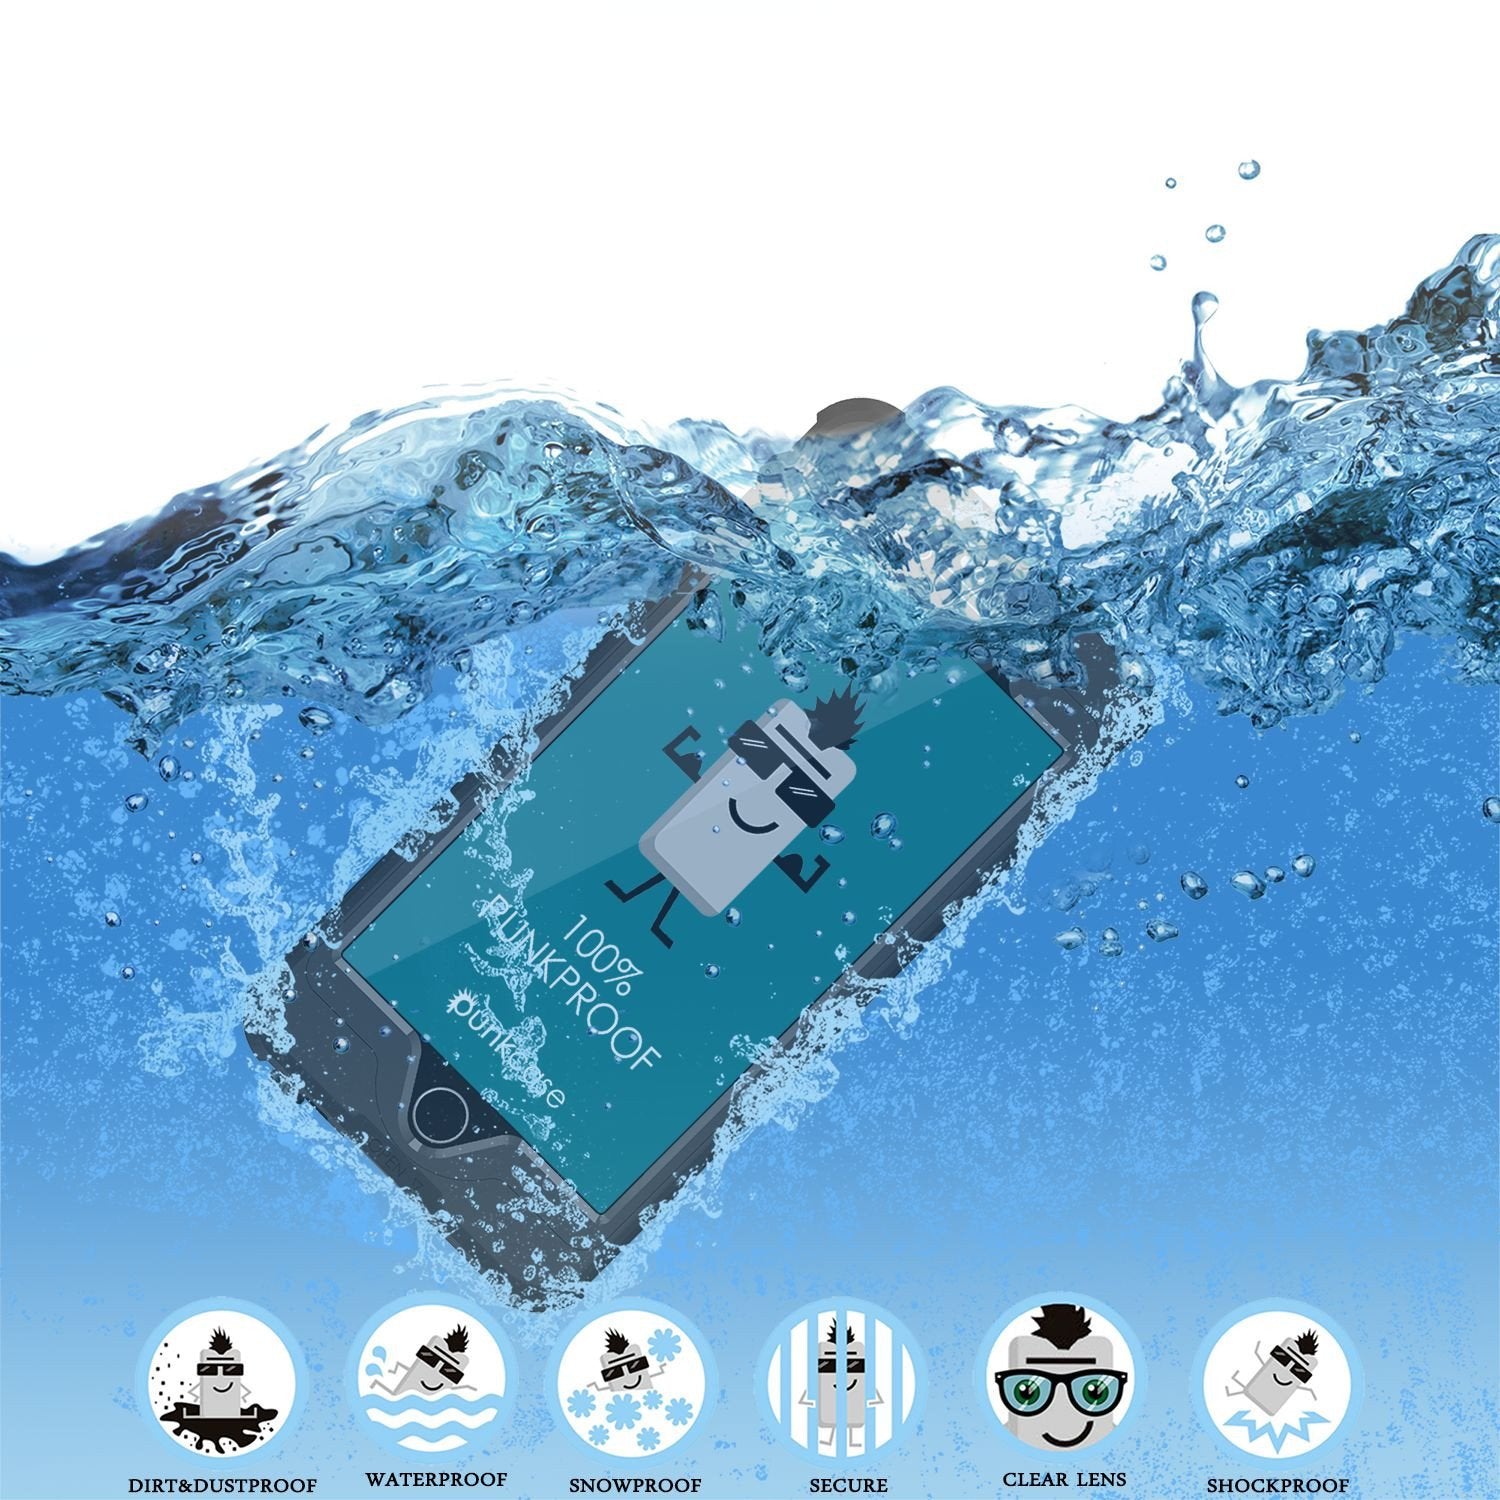 iPhone 6s/6 Waterproof Case PunkCase StudStar Black w/ Attached Screen Protector | Lifetime Warranty